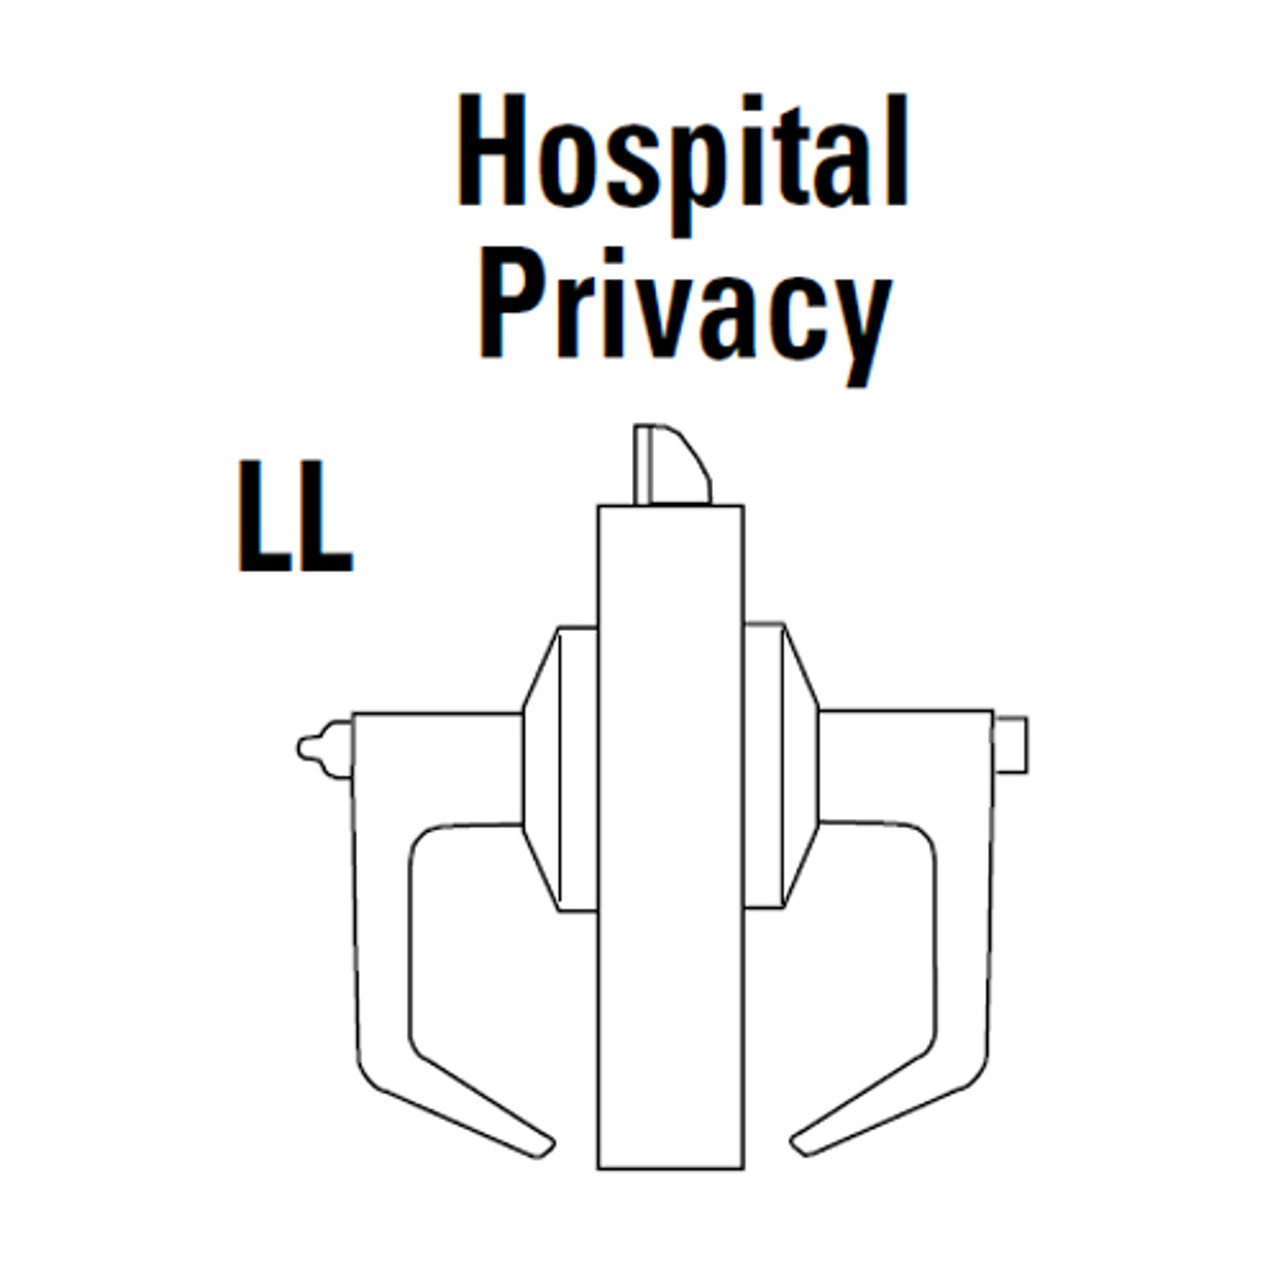 9K30LL14DSTK605LM Best 9K Series Hospital Privacy Heavy Duty Cylindrical Lever Locks in Bright Brass